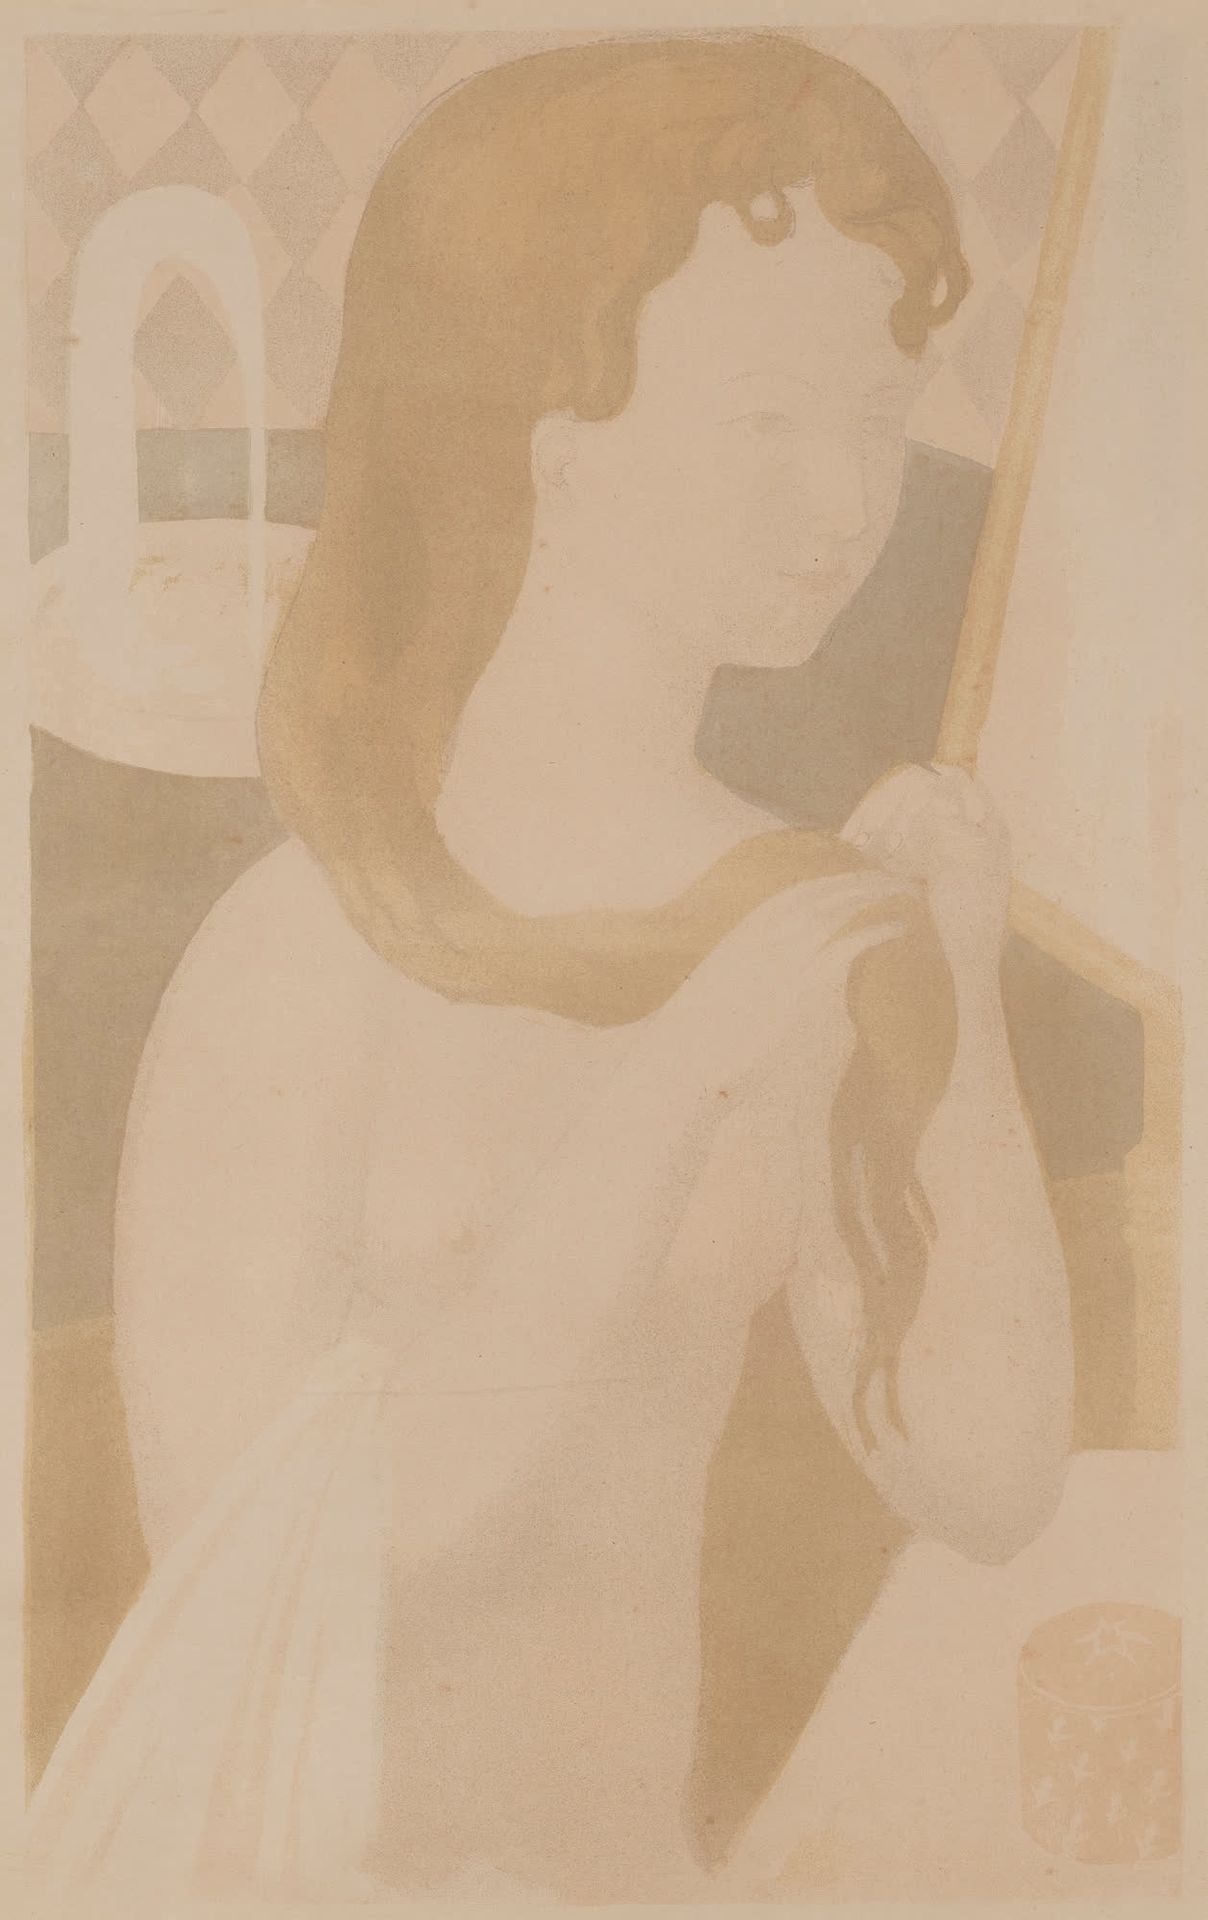 Maurice DENIS (1870-1943) Jeune fille à sa toilette, 1895.
Lithograph on glazed &hellip;